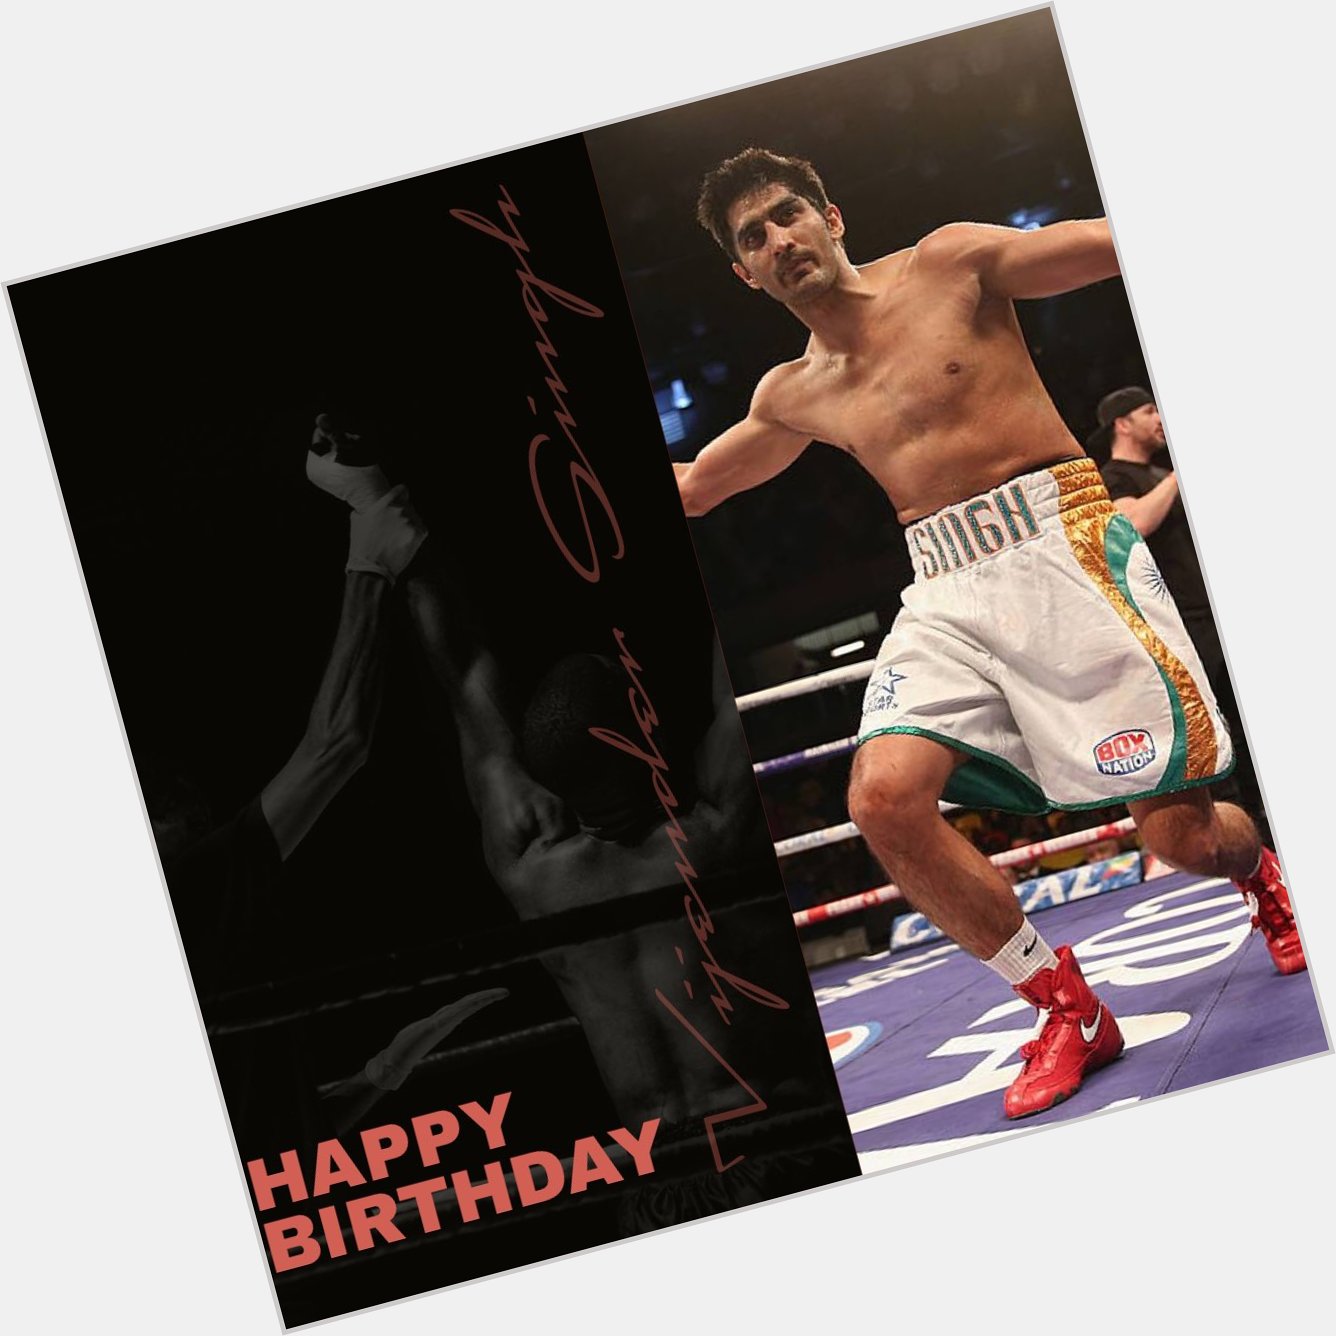 Happy birthday to the pro-boxer Vijender Singh! 